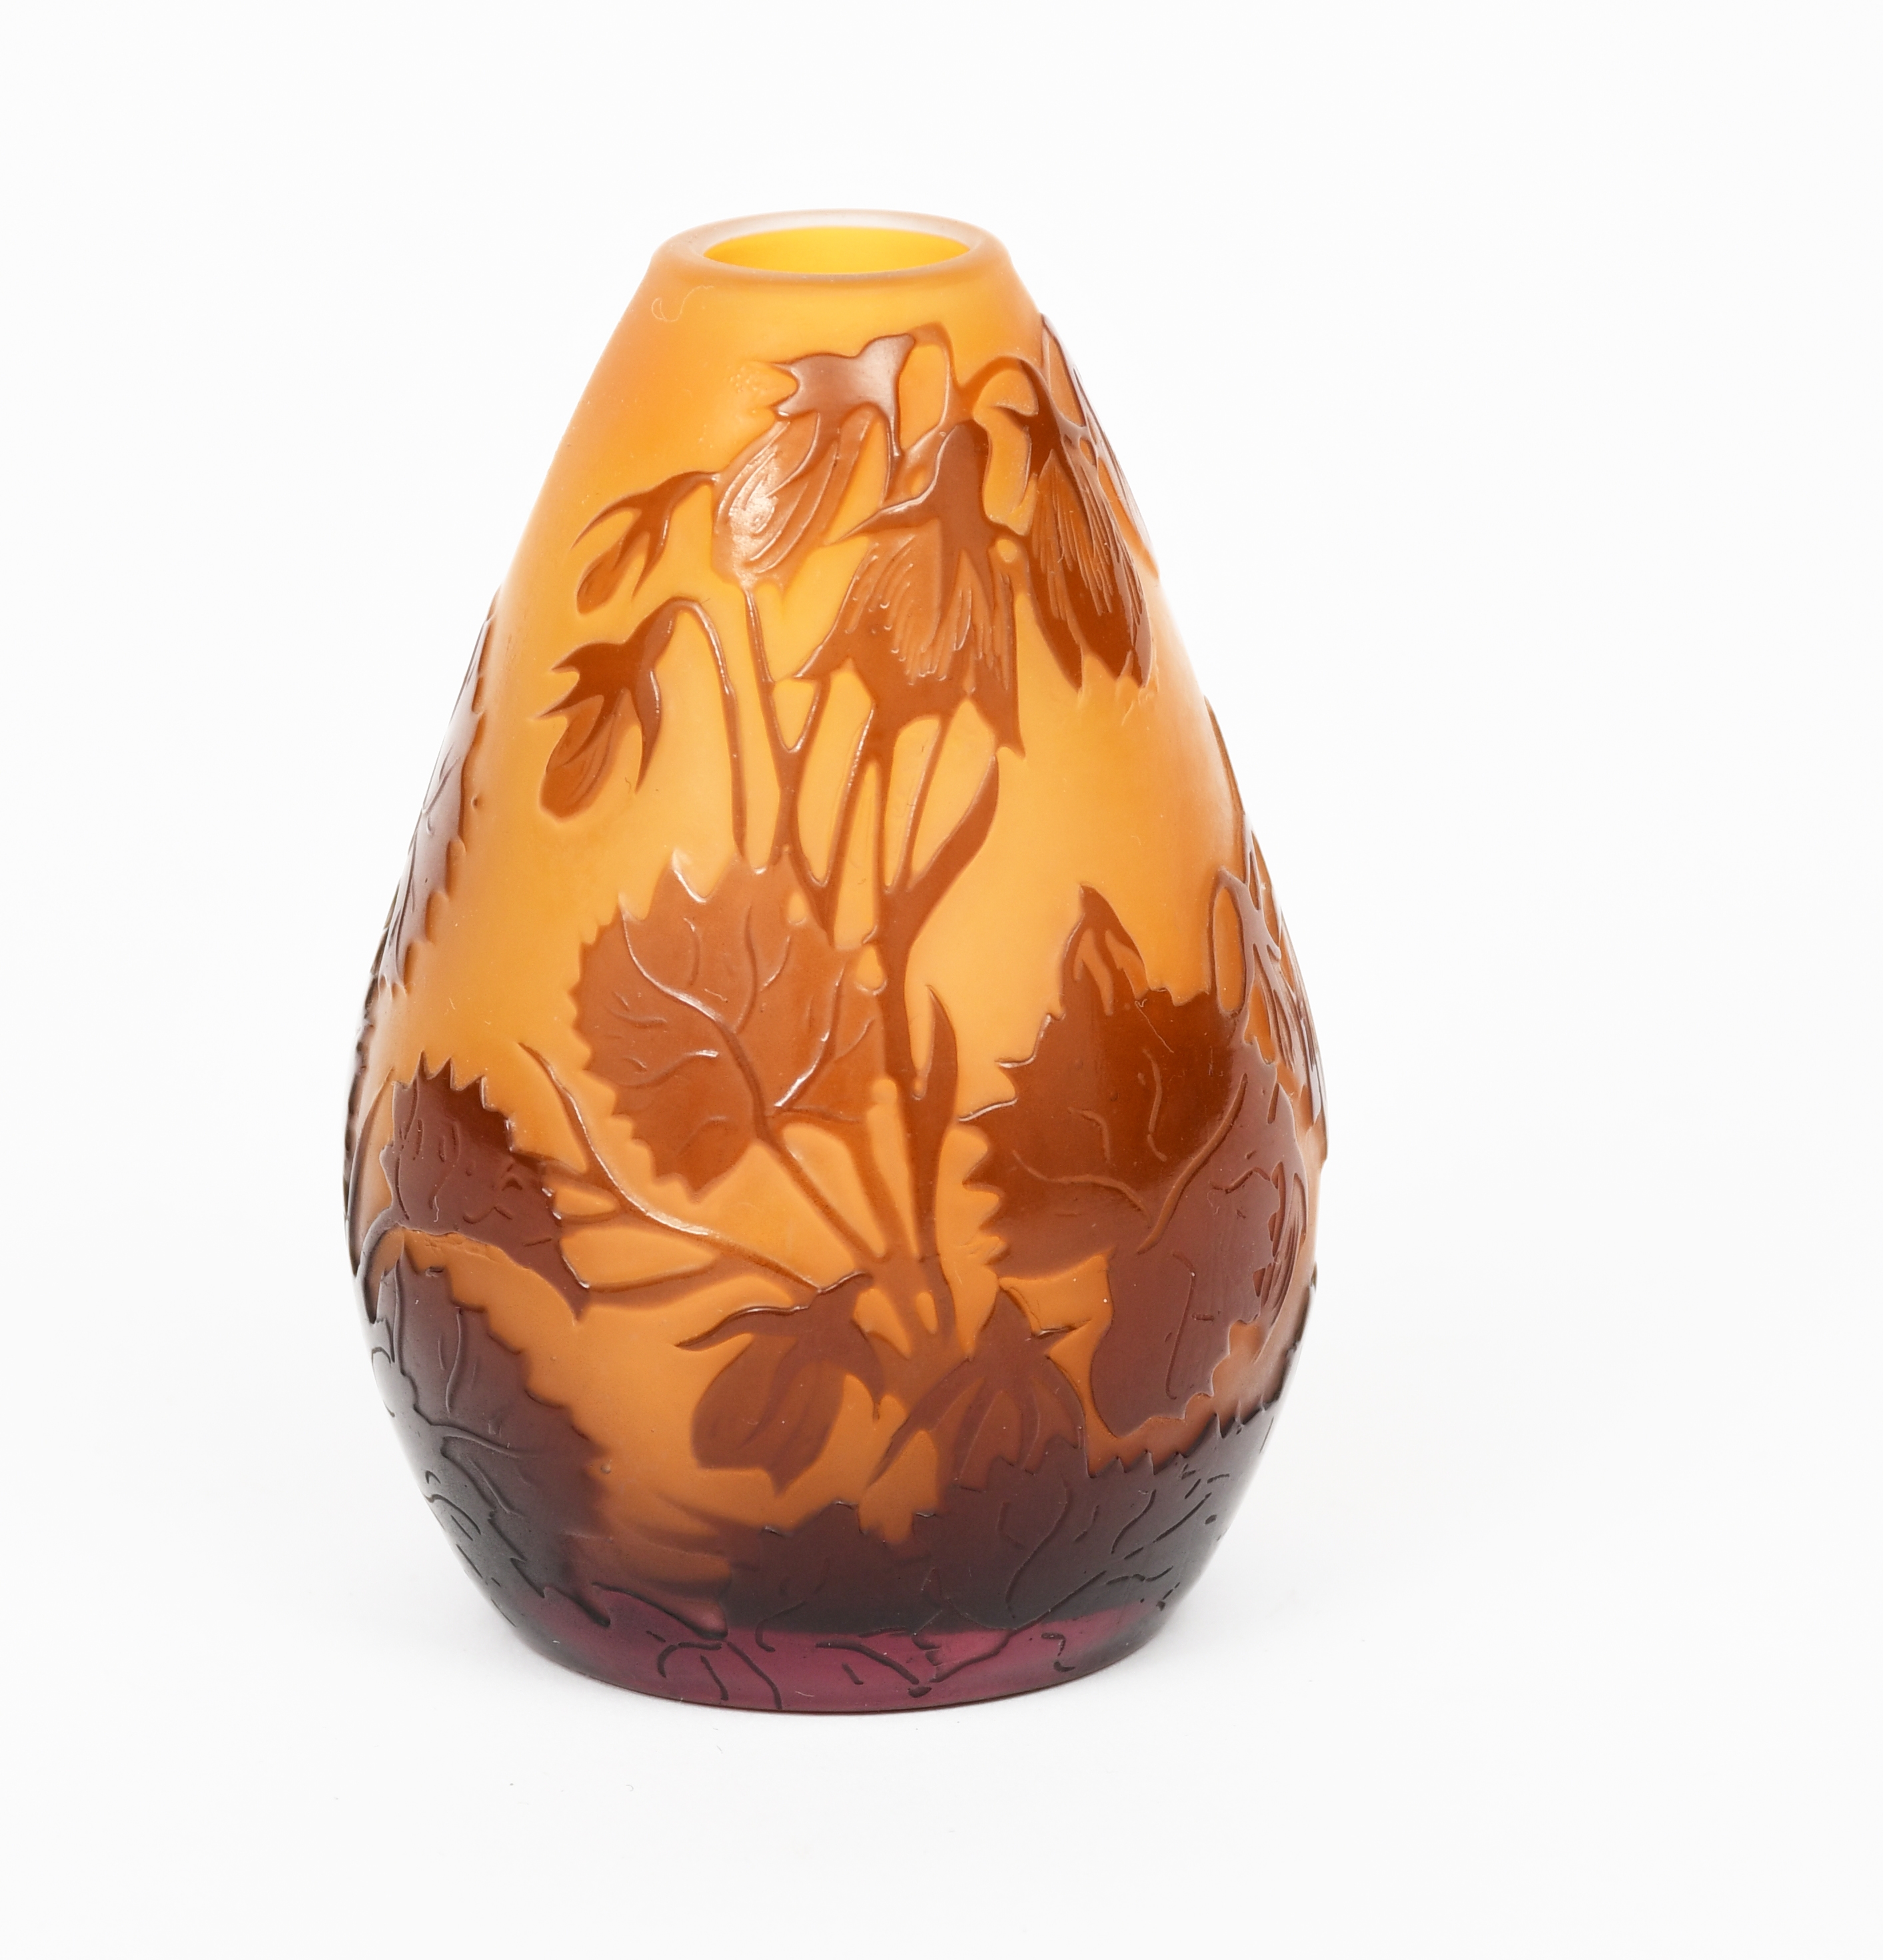 Interpersoonlijk Ontkennen Klas Emile Gallé | A small Art Nouveau Galle cameo glass vase | MutualArt